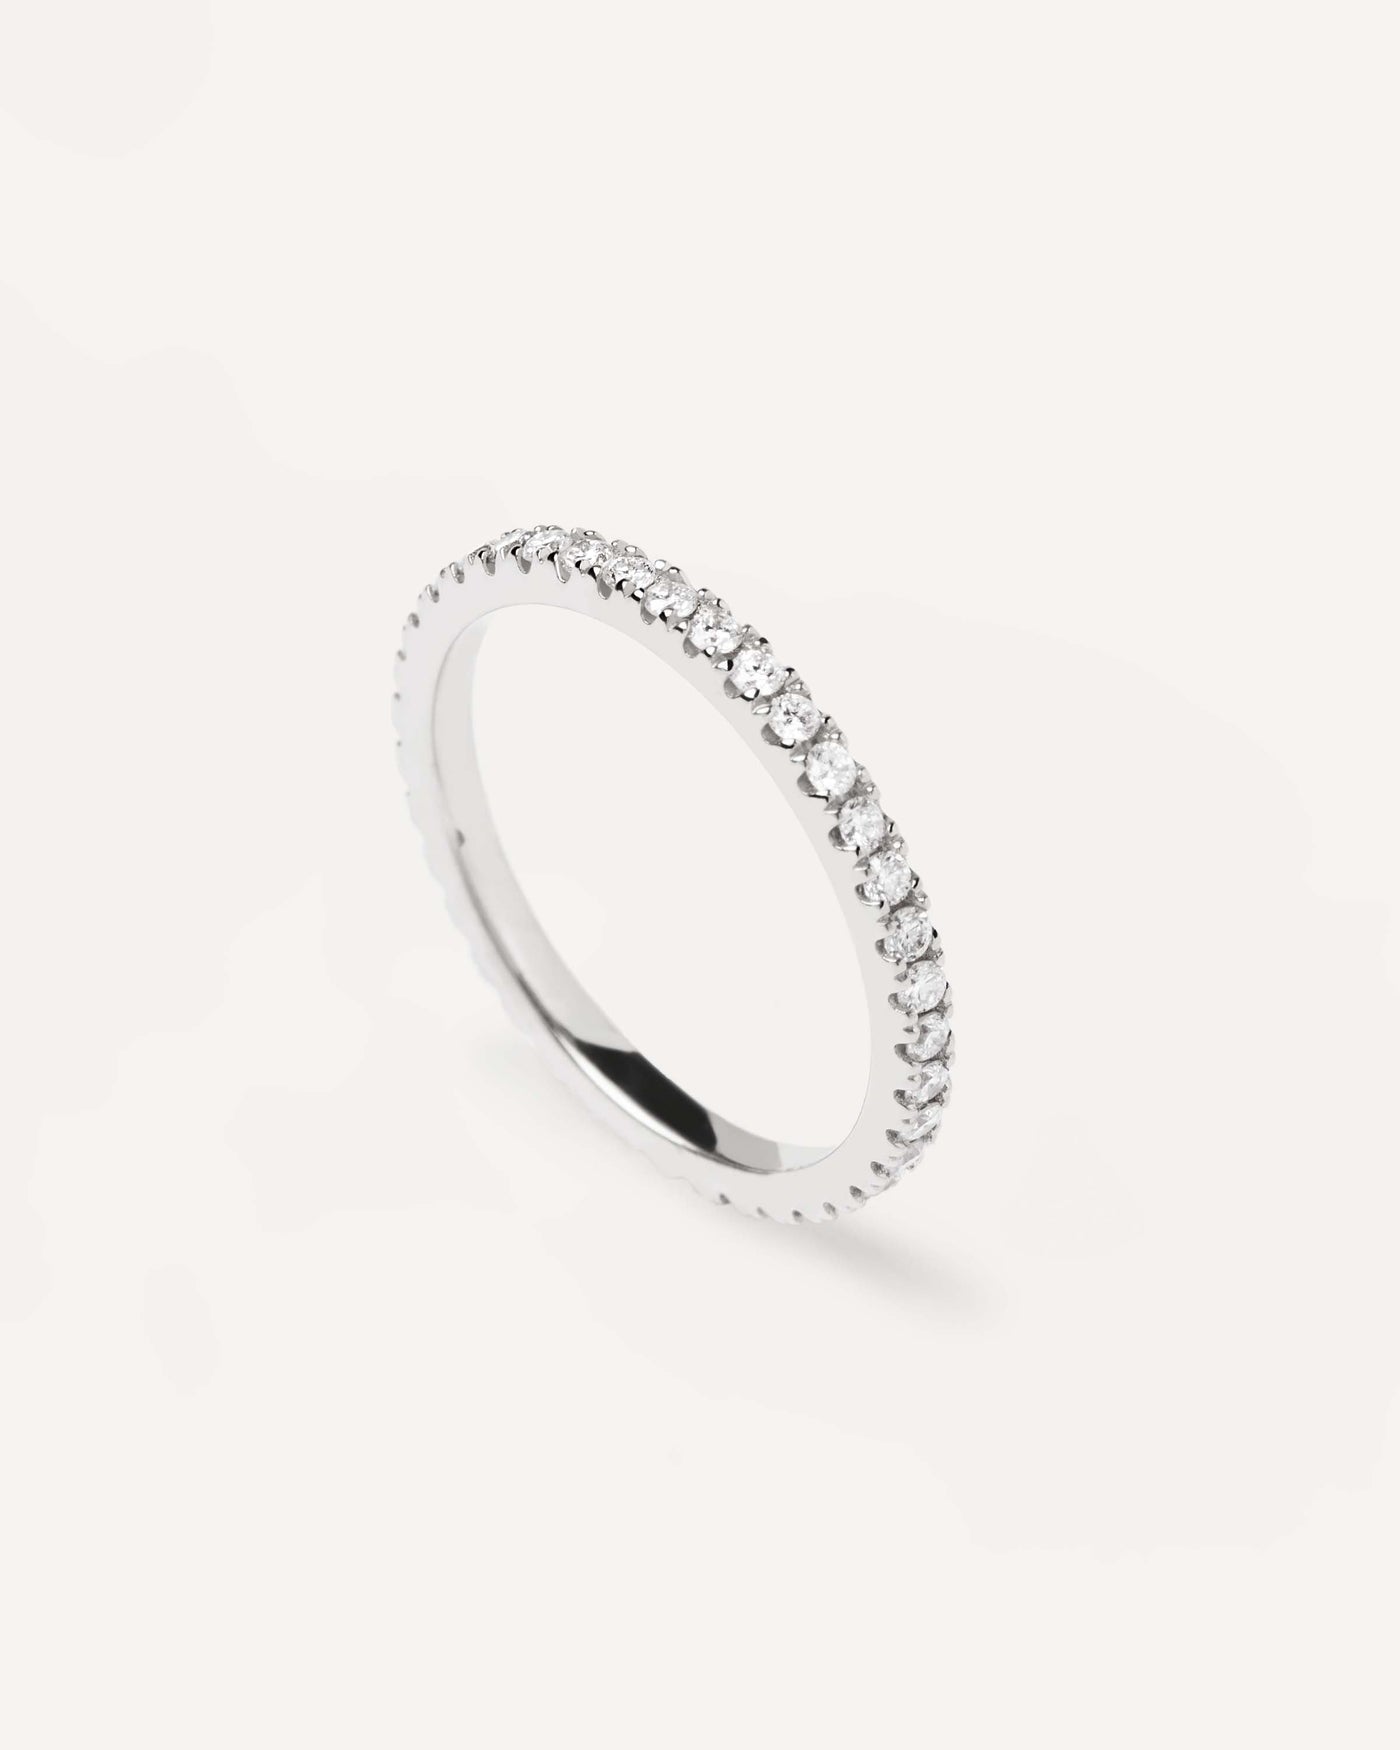 Diamonds and White Gold Eternity Medium Ring - 18K solid white gold